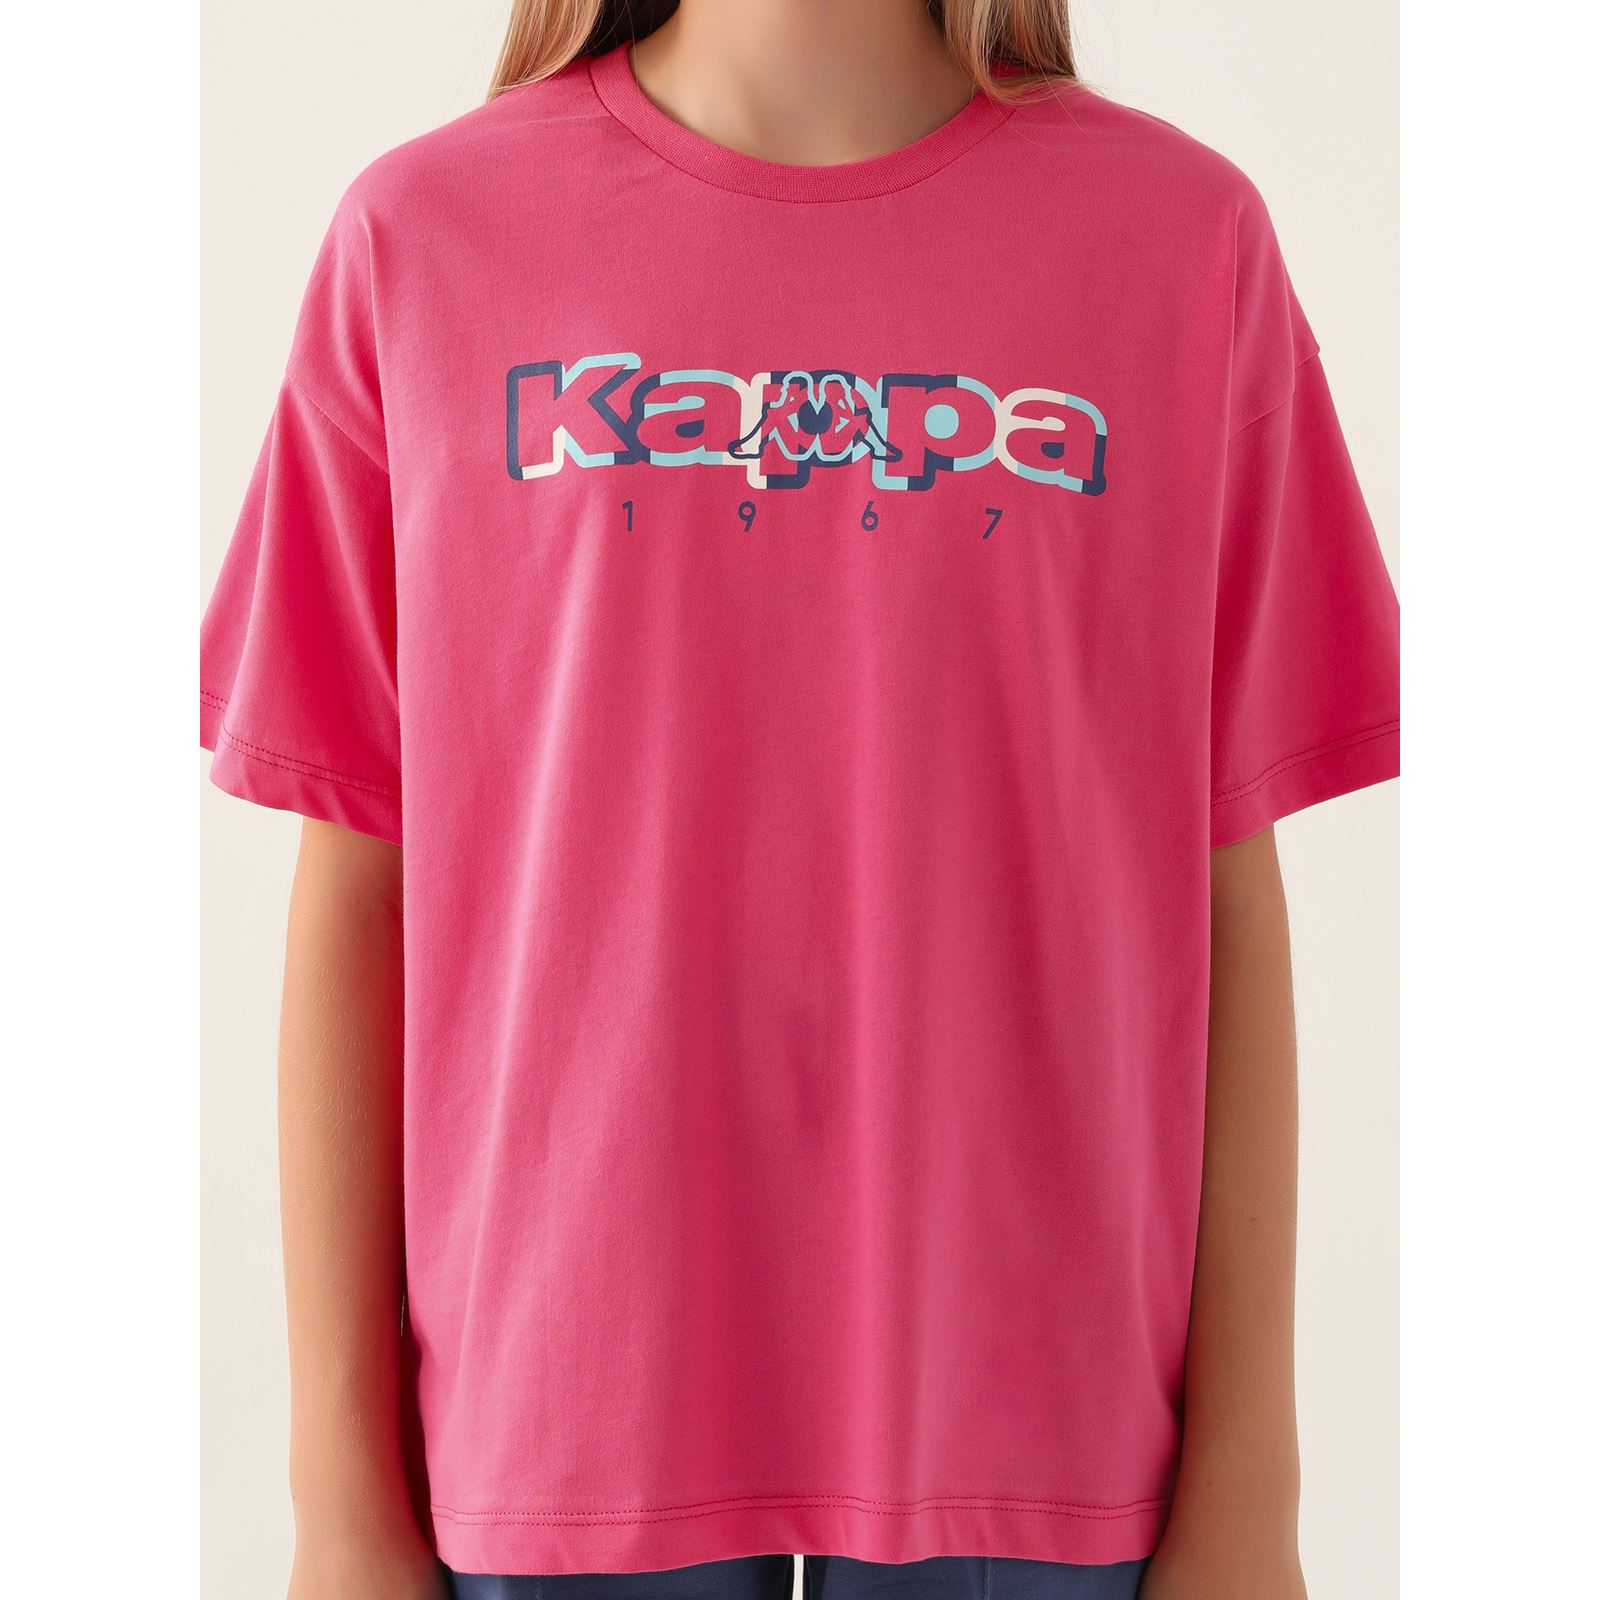 Kappa Kız Çocuk Tişört 5-15 Yaş Açık Fuşya